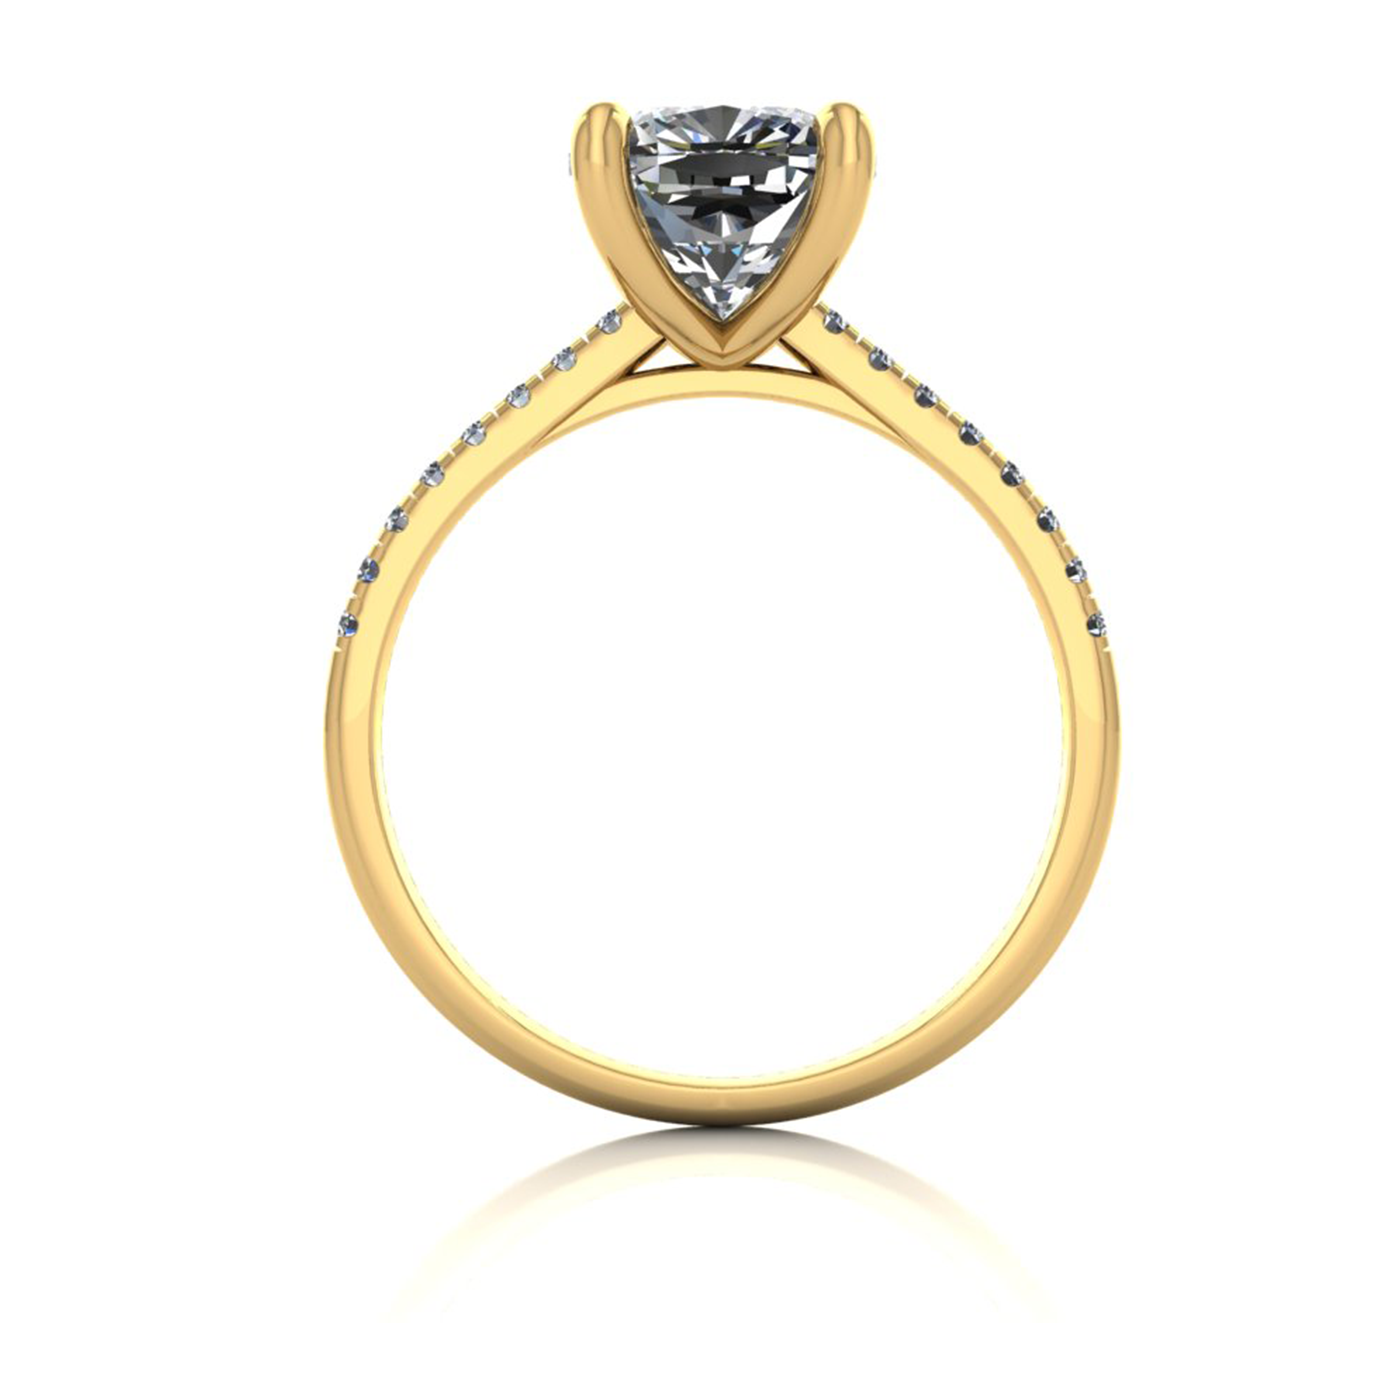 18k yellow gold 2.5ct 4 prongs cushion cut diamond engagement ring with whisper thin pavÉ set band